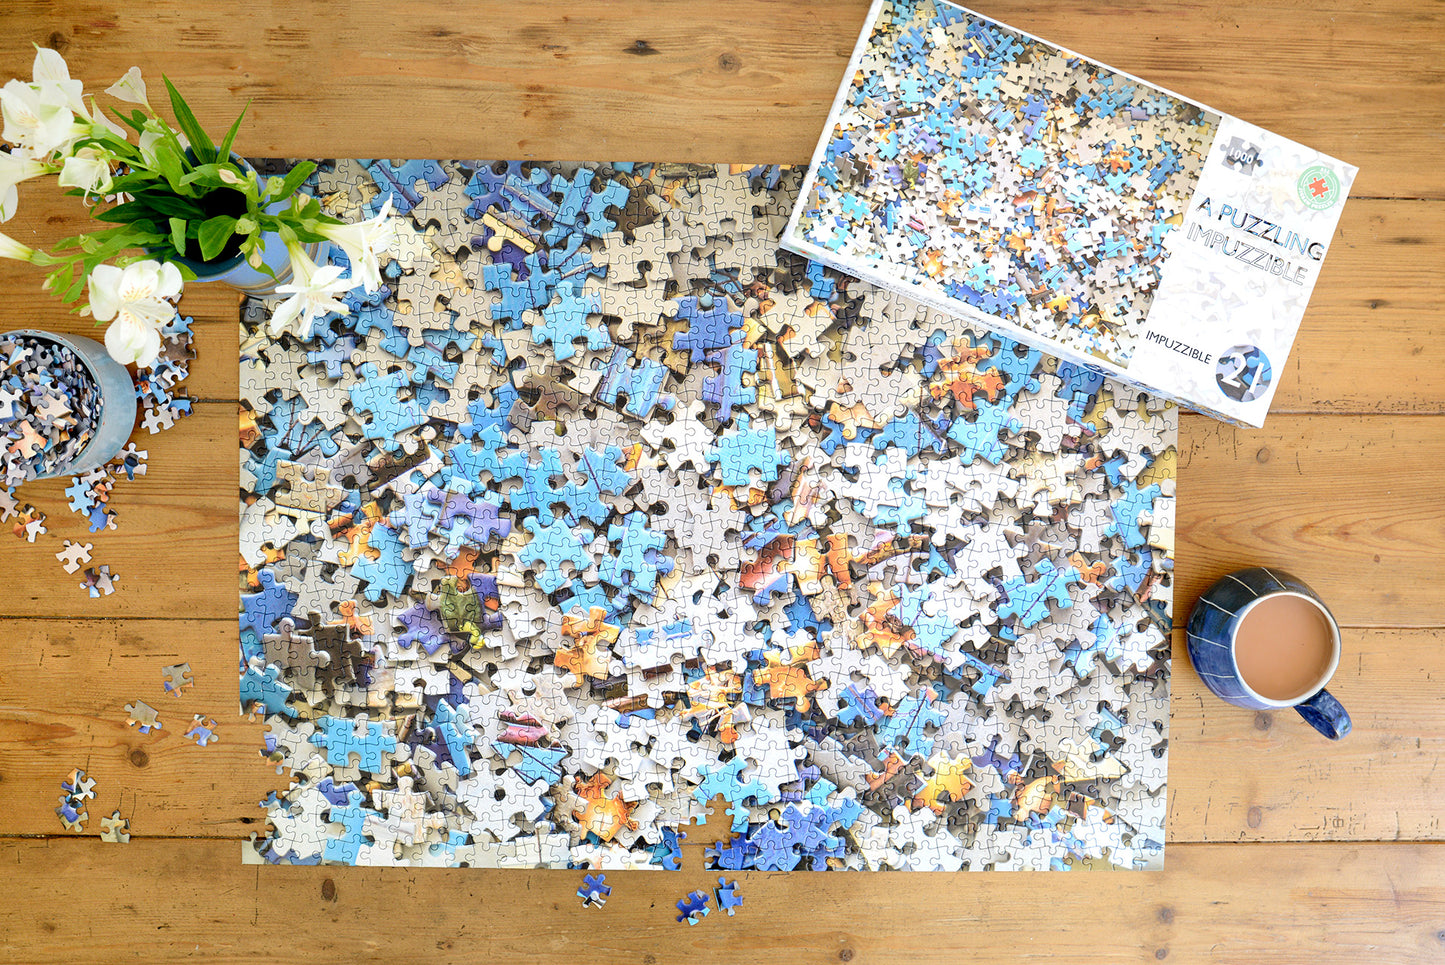 A Puzzling Impuzzible - Impuzzible No.21 - 1000 Piece Jigsaw Puzzle